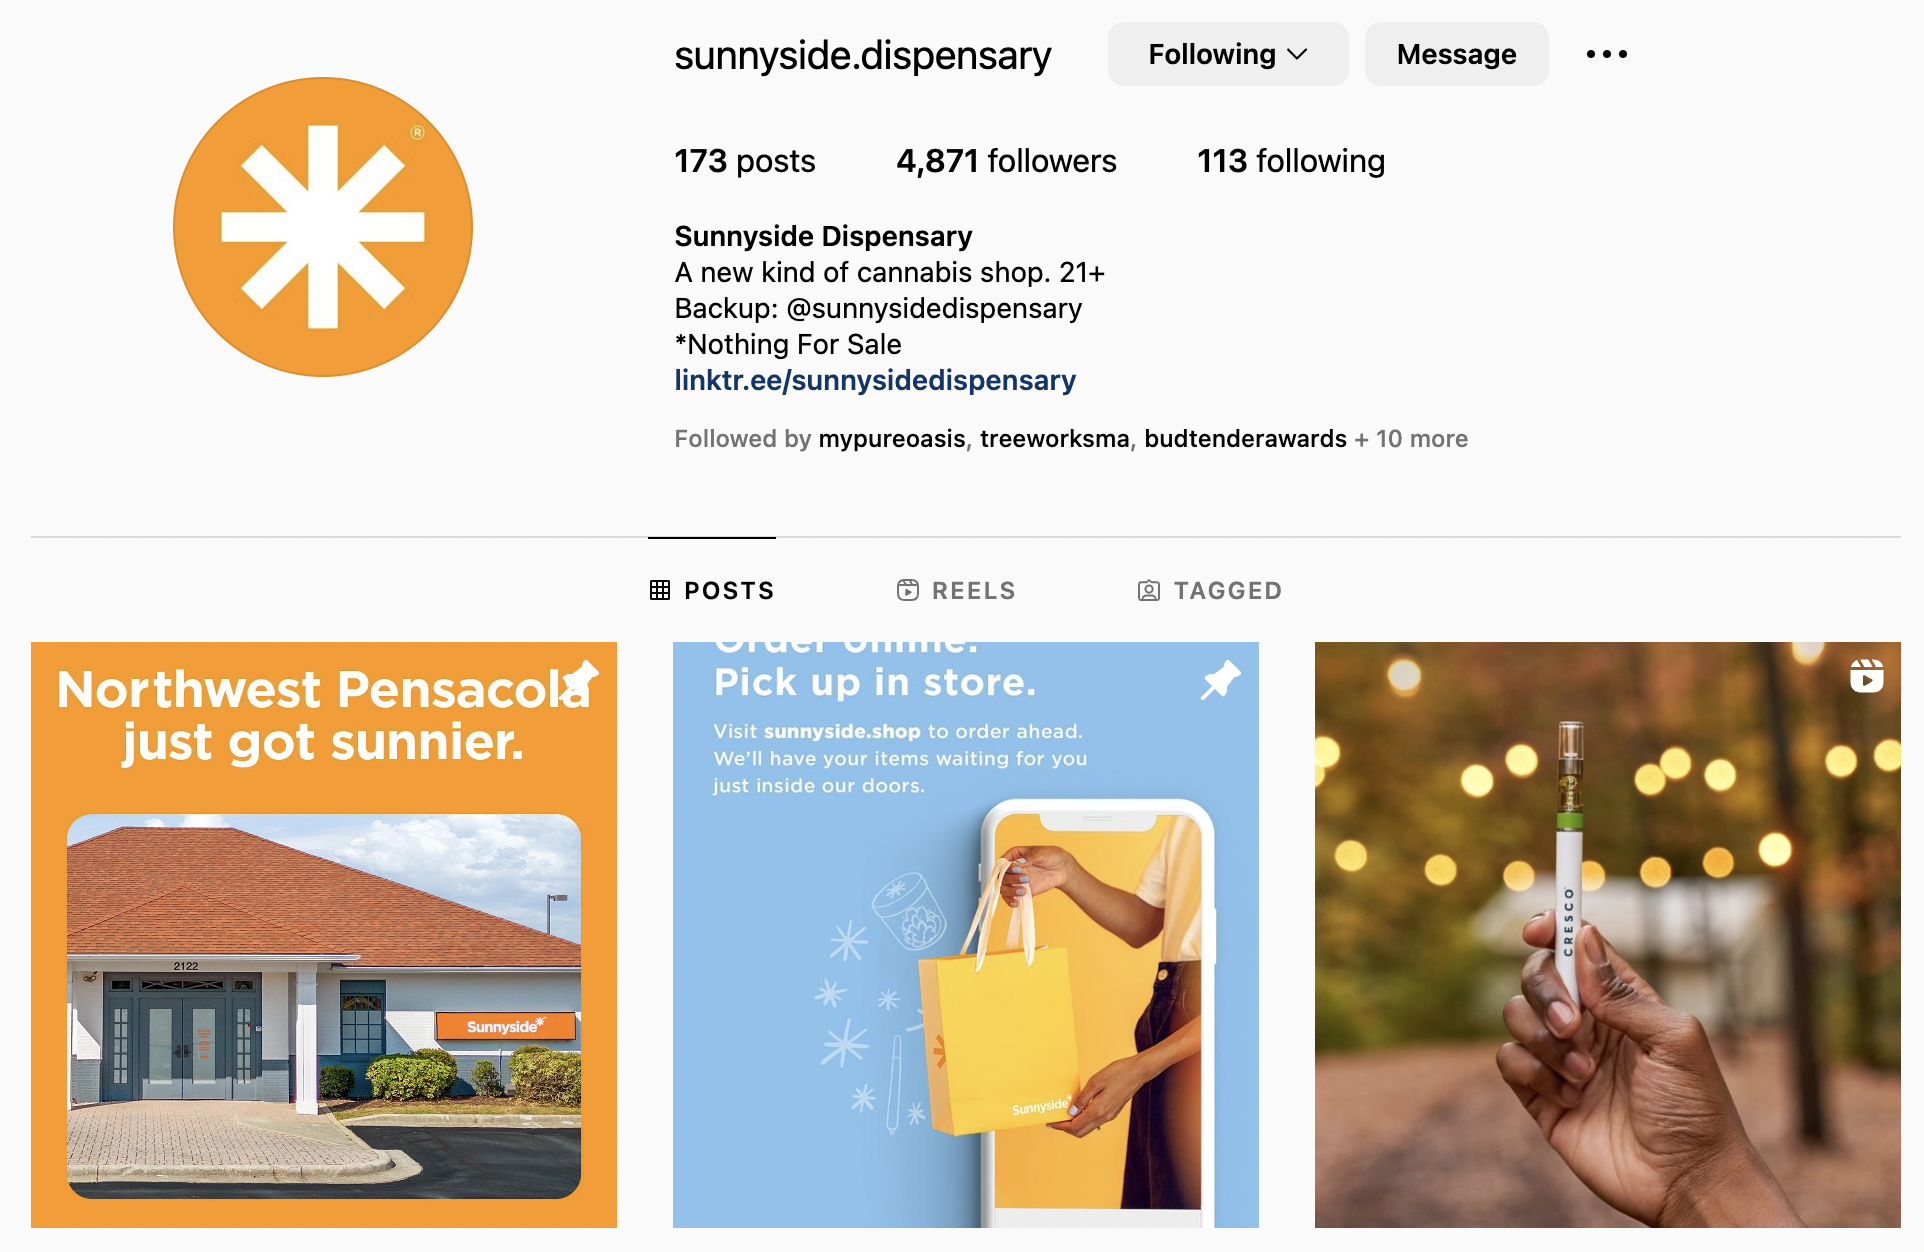 Sunnyside dispensary Instagram profile